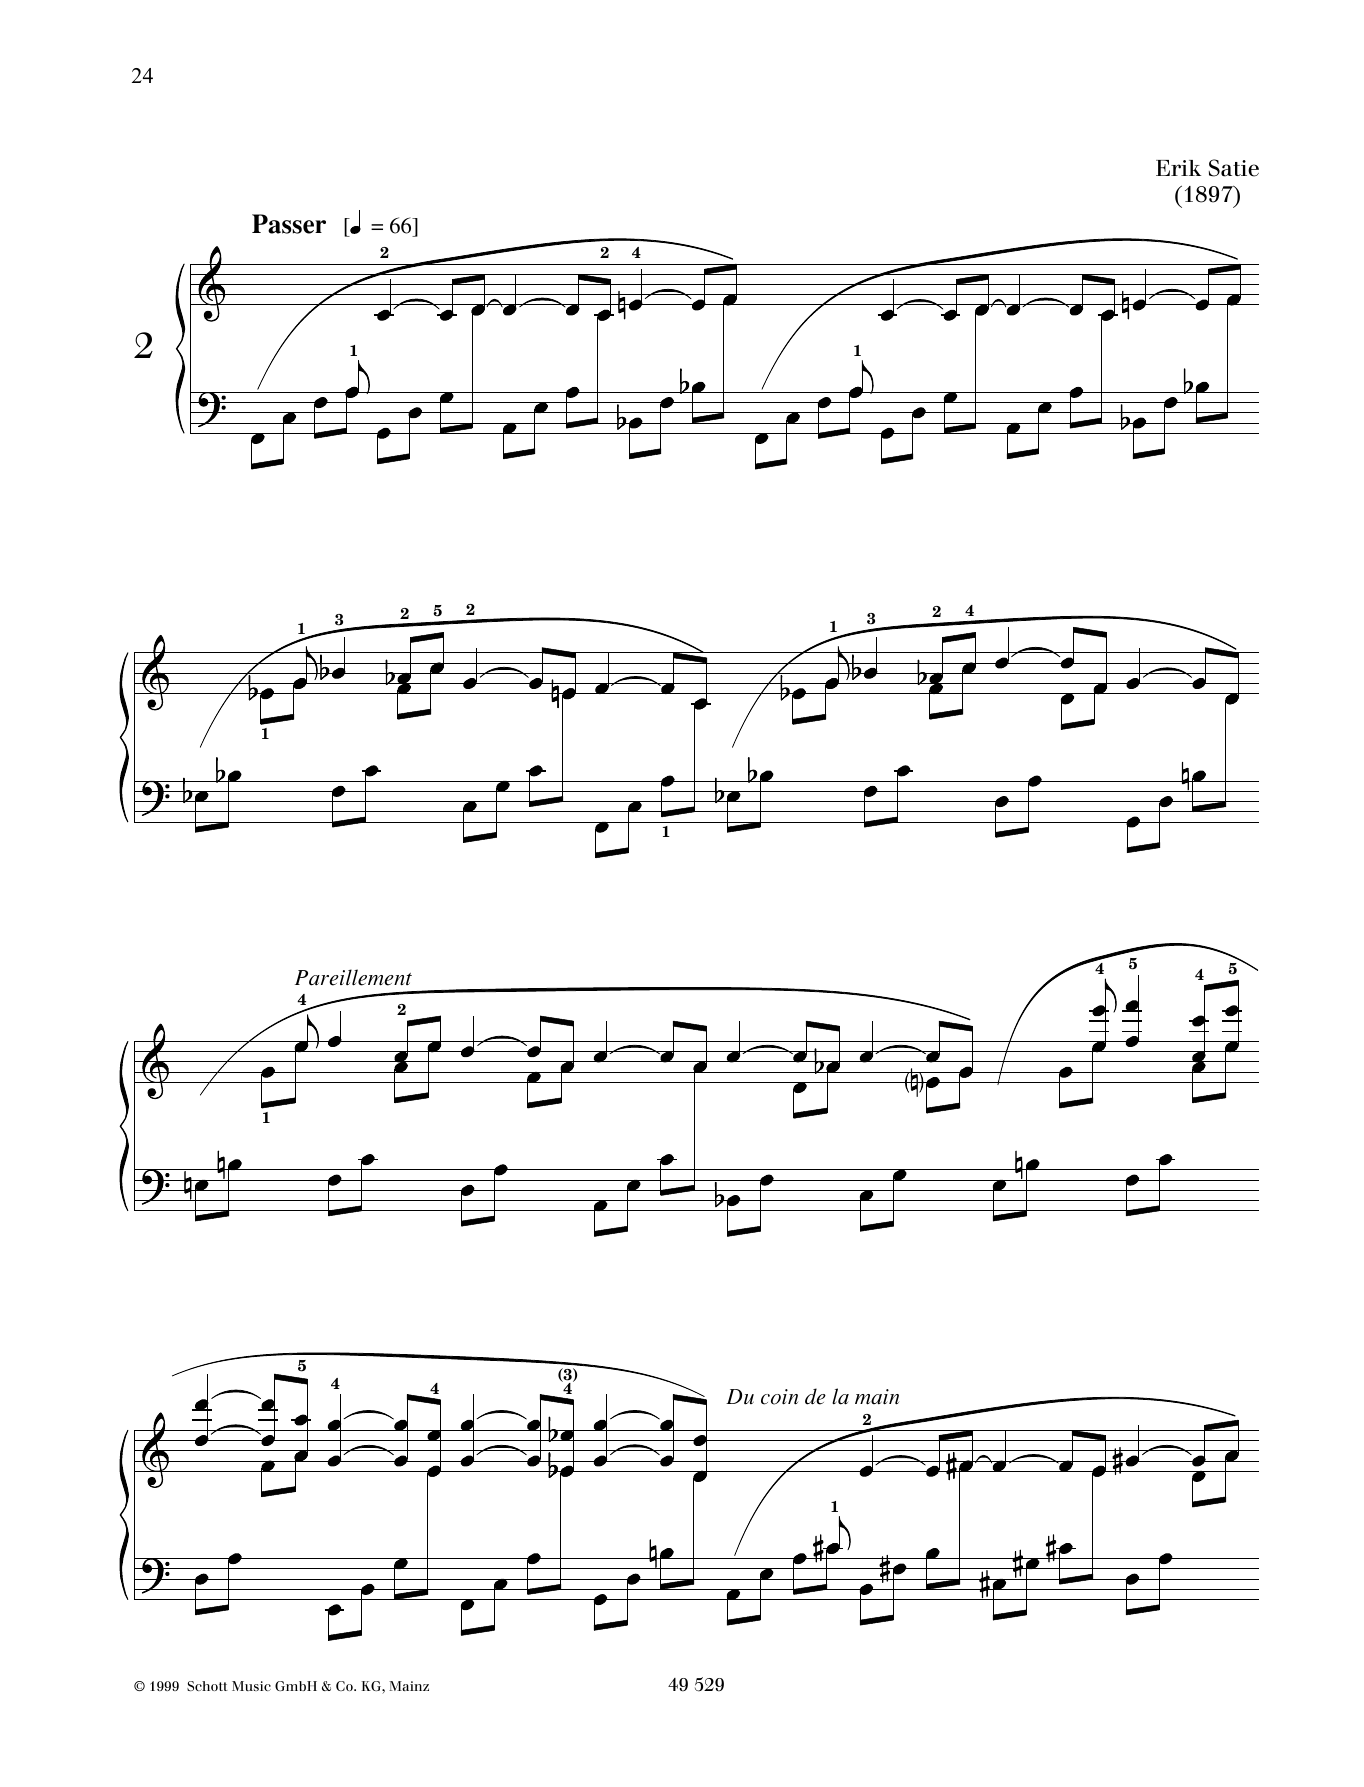 Erik Satie Danse de travers No. 2 Sheet Music Notes & Chords for Piano Solo - Download or Print PDF